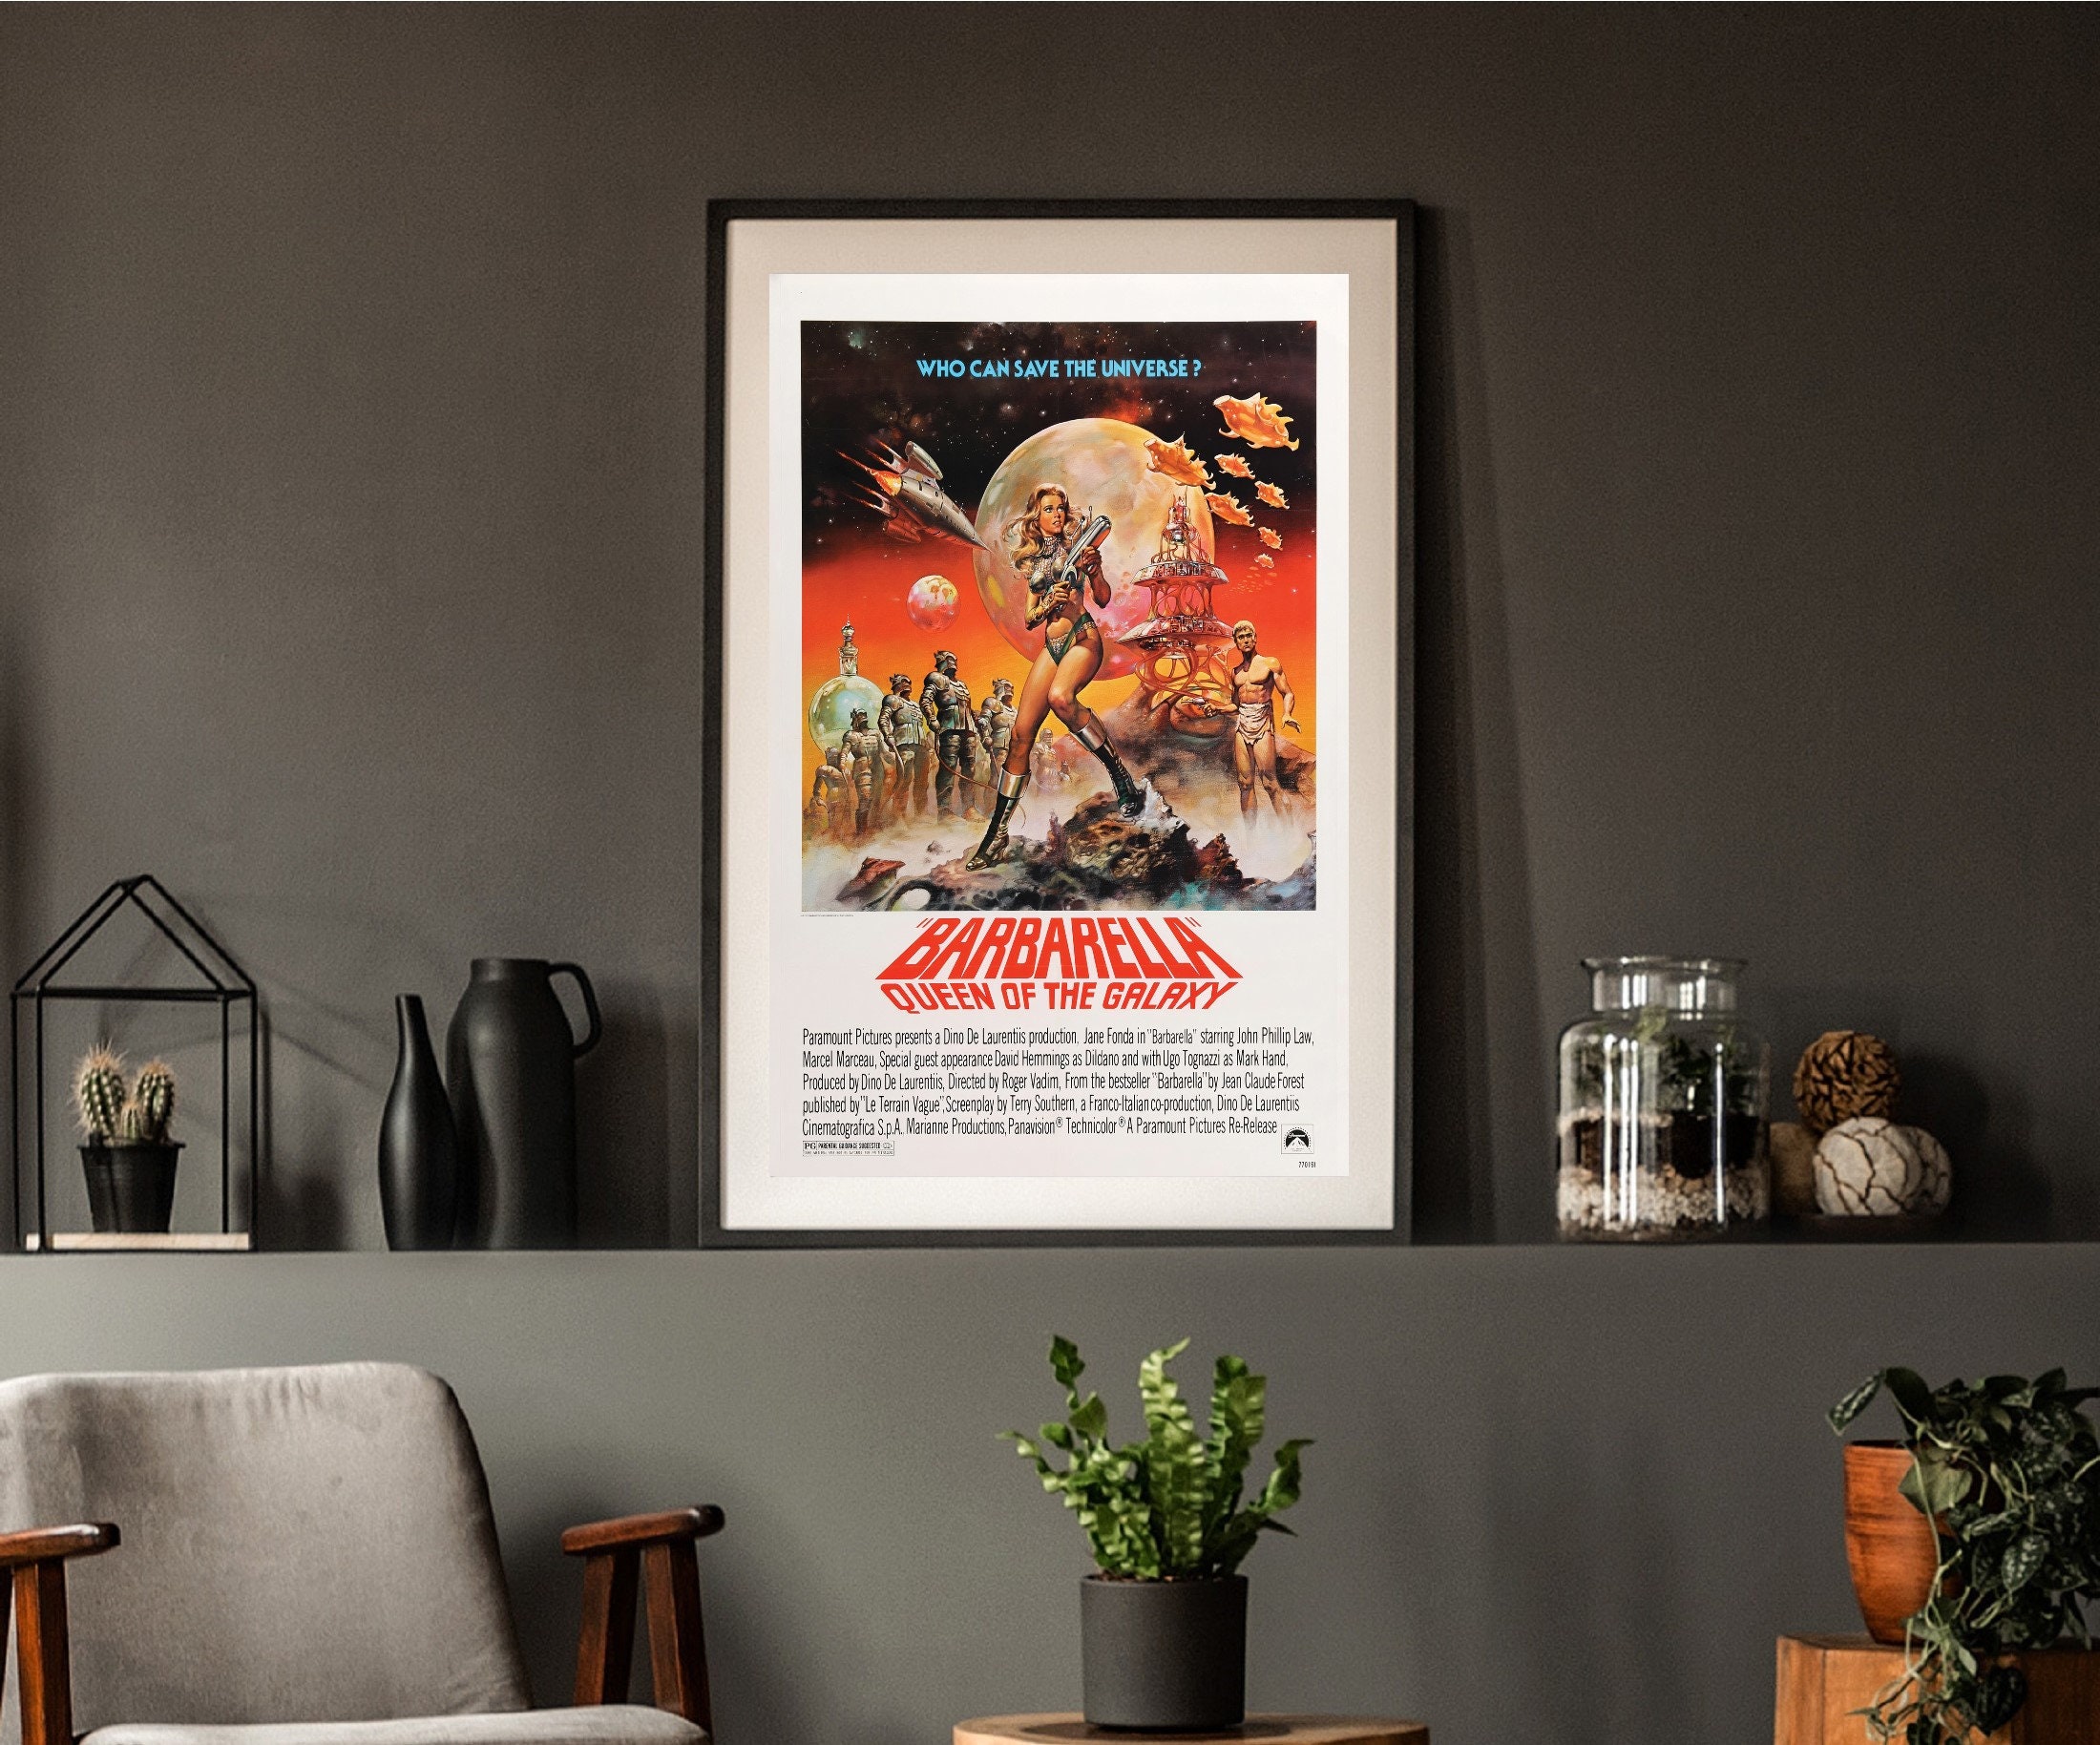 Barbarella Queen Of The Galaxy Movie Poster Printable